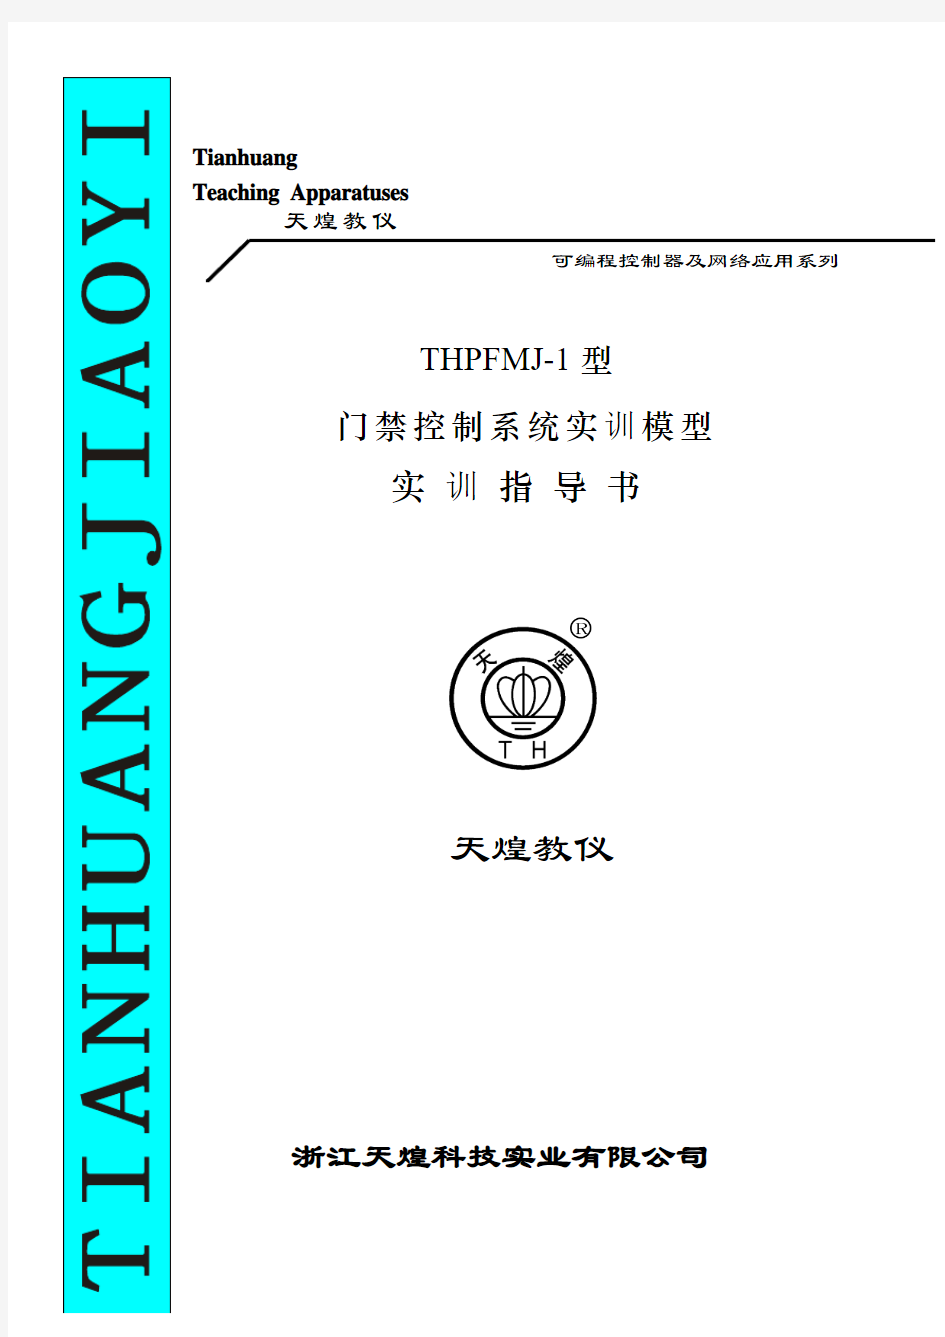 THPFMJ-1型 门禁控制系统实训模型实验指导书